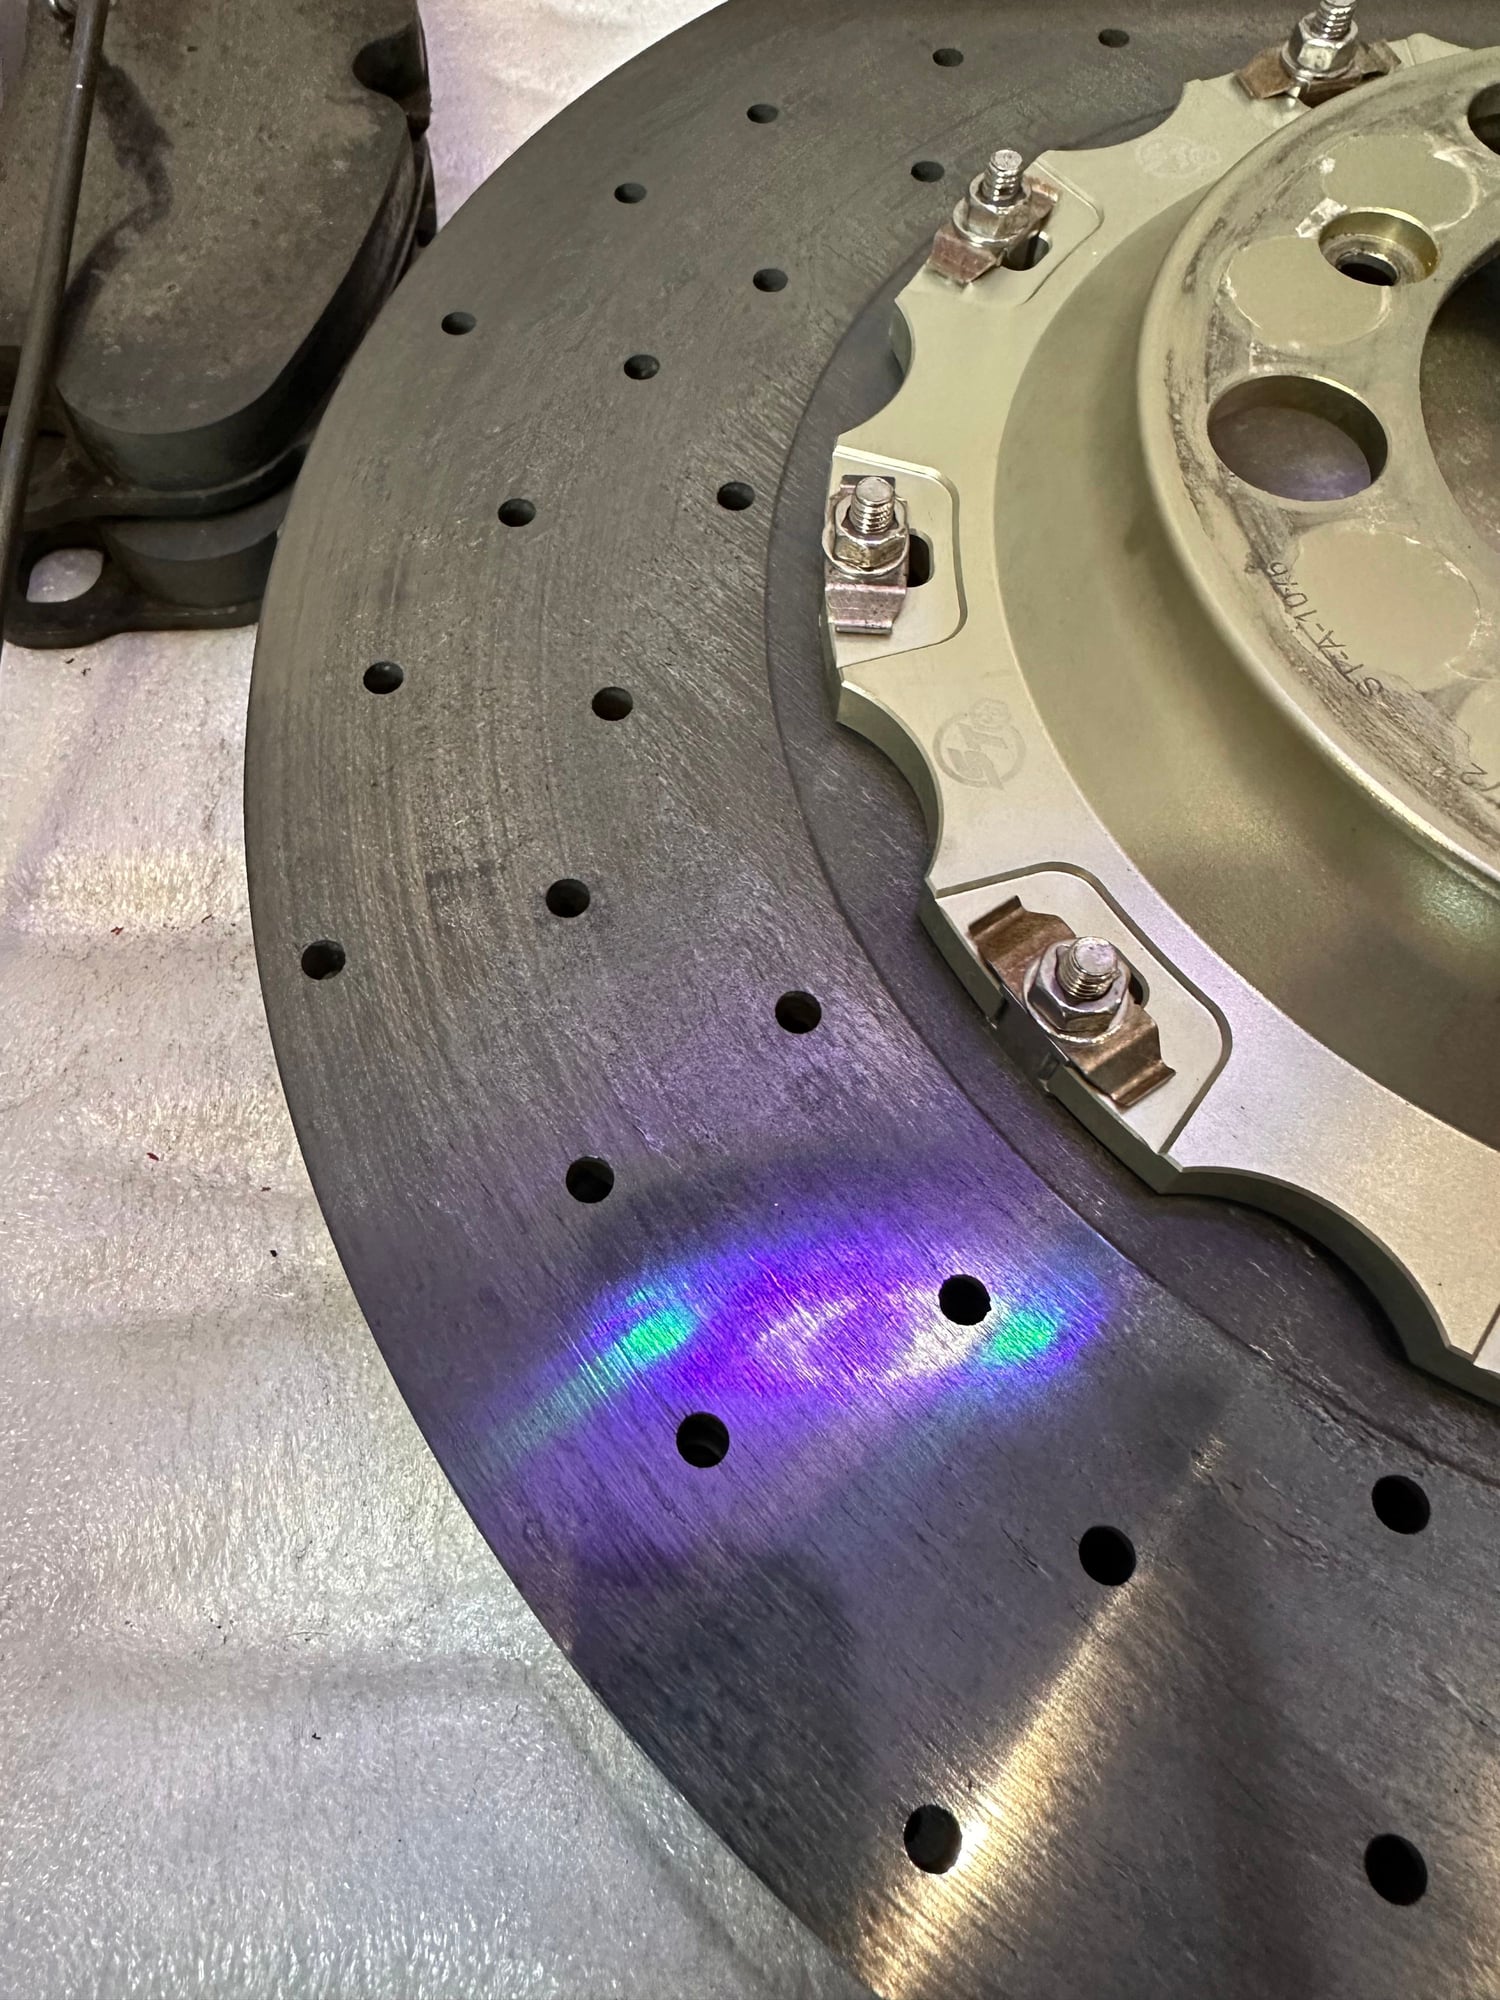 2019 Porsche GT3 - Surface Transforms Carbon Ceramic Rotors/Pads - Brakes - $6,500 - Gig Harbor, WA 98335, United States